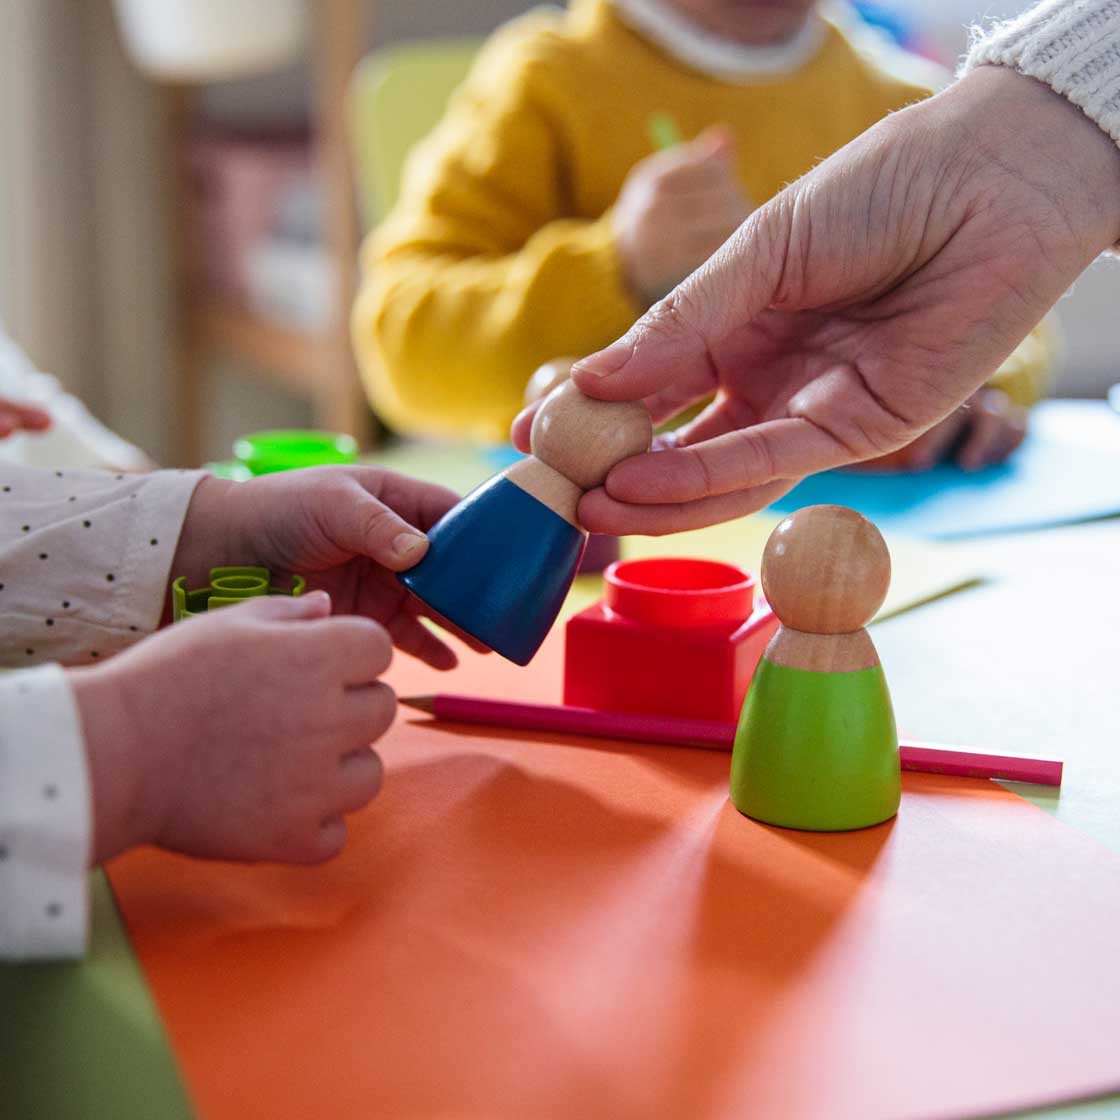 Experts fear abuse rampant in Japan’s nursery schools